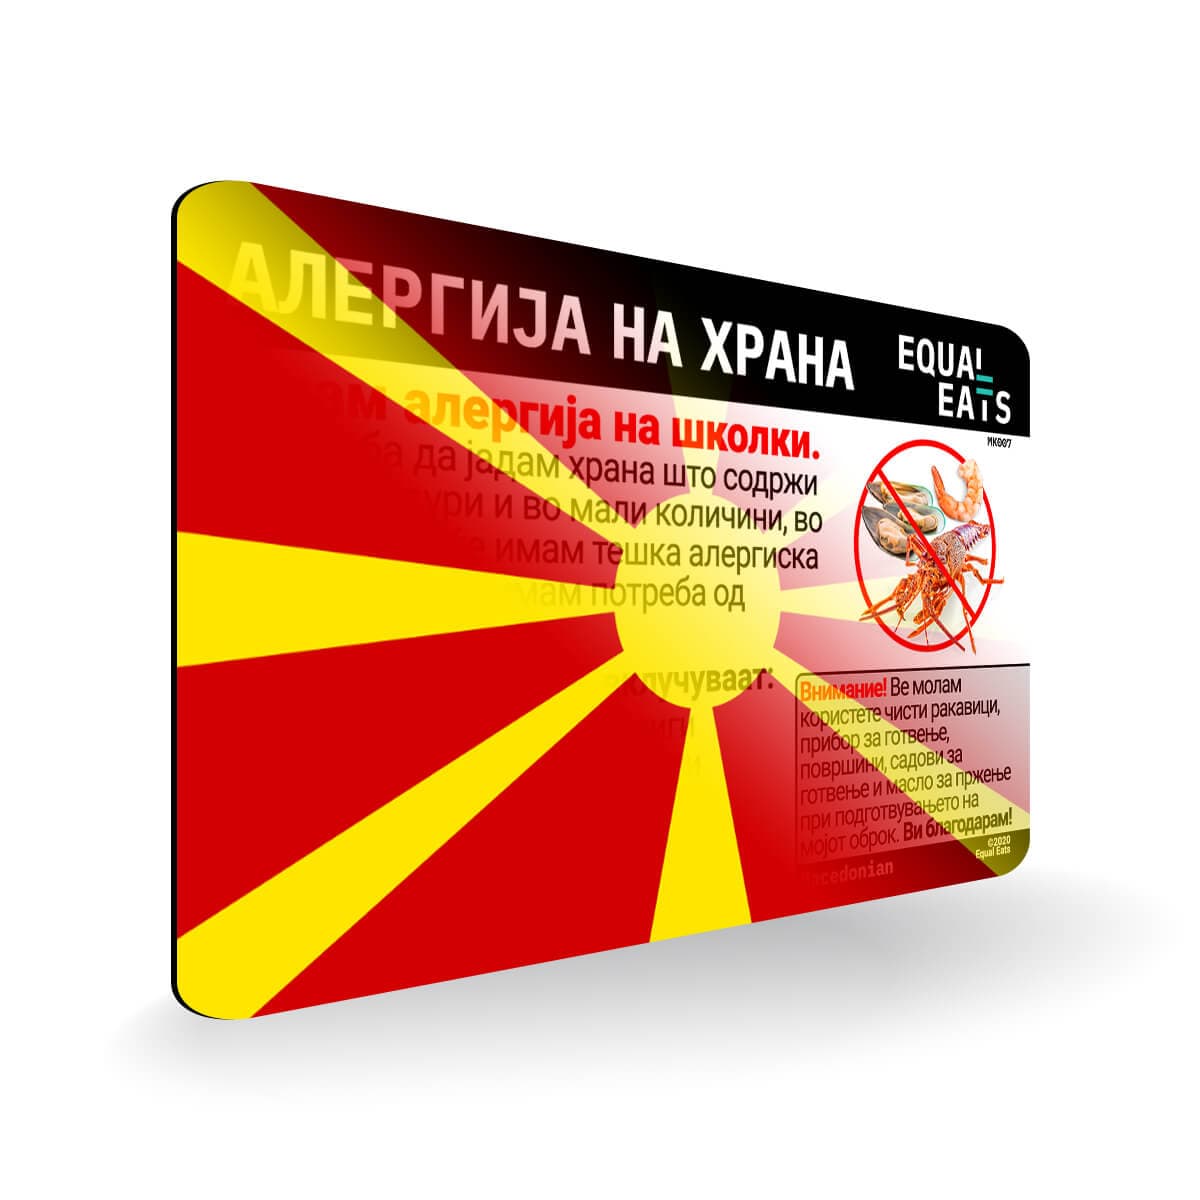 Shellfish Allergy in Macedonian. Shellfish Allergy Card for Macedonia